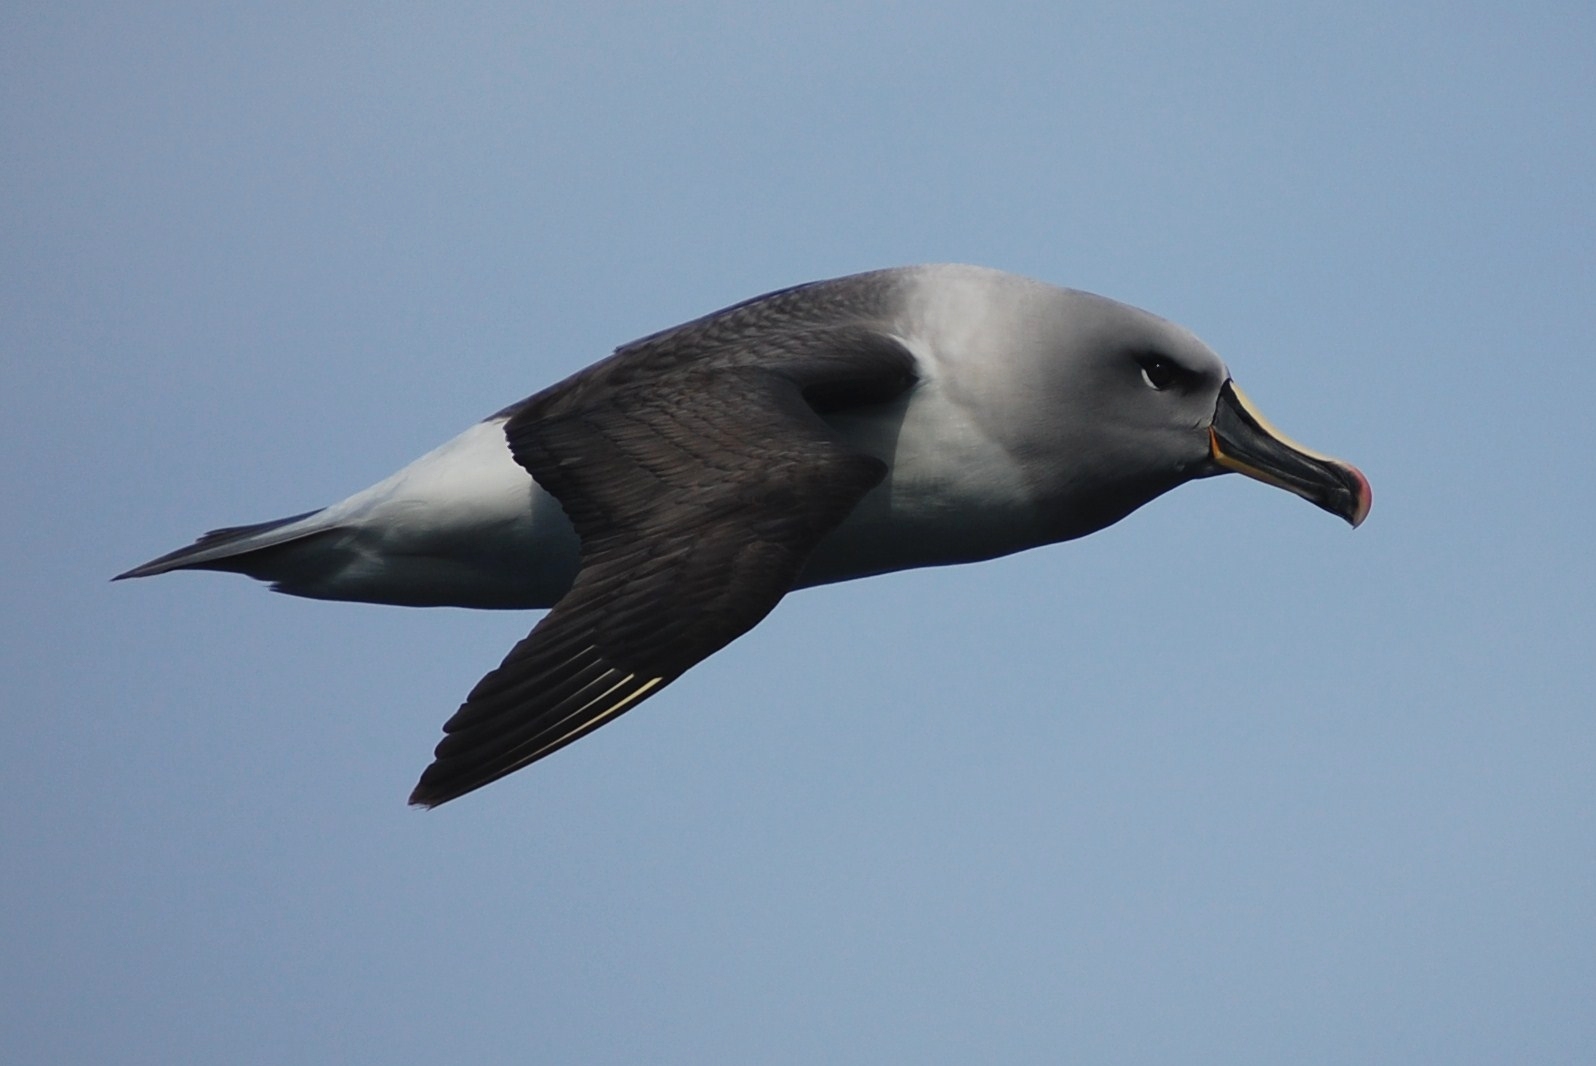 a bird with long beak flying through the air